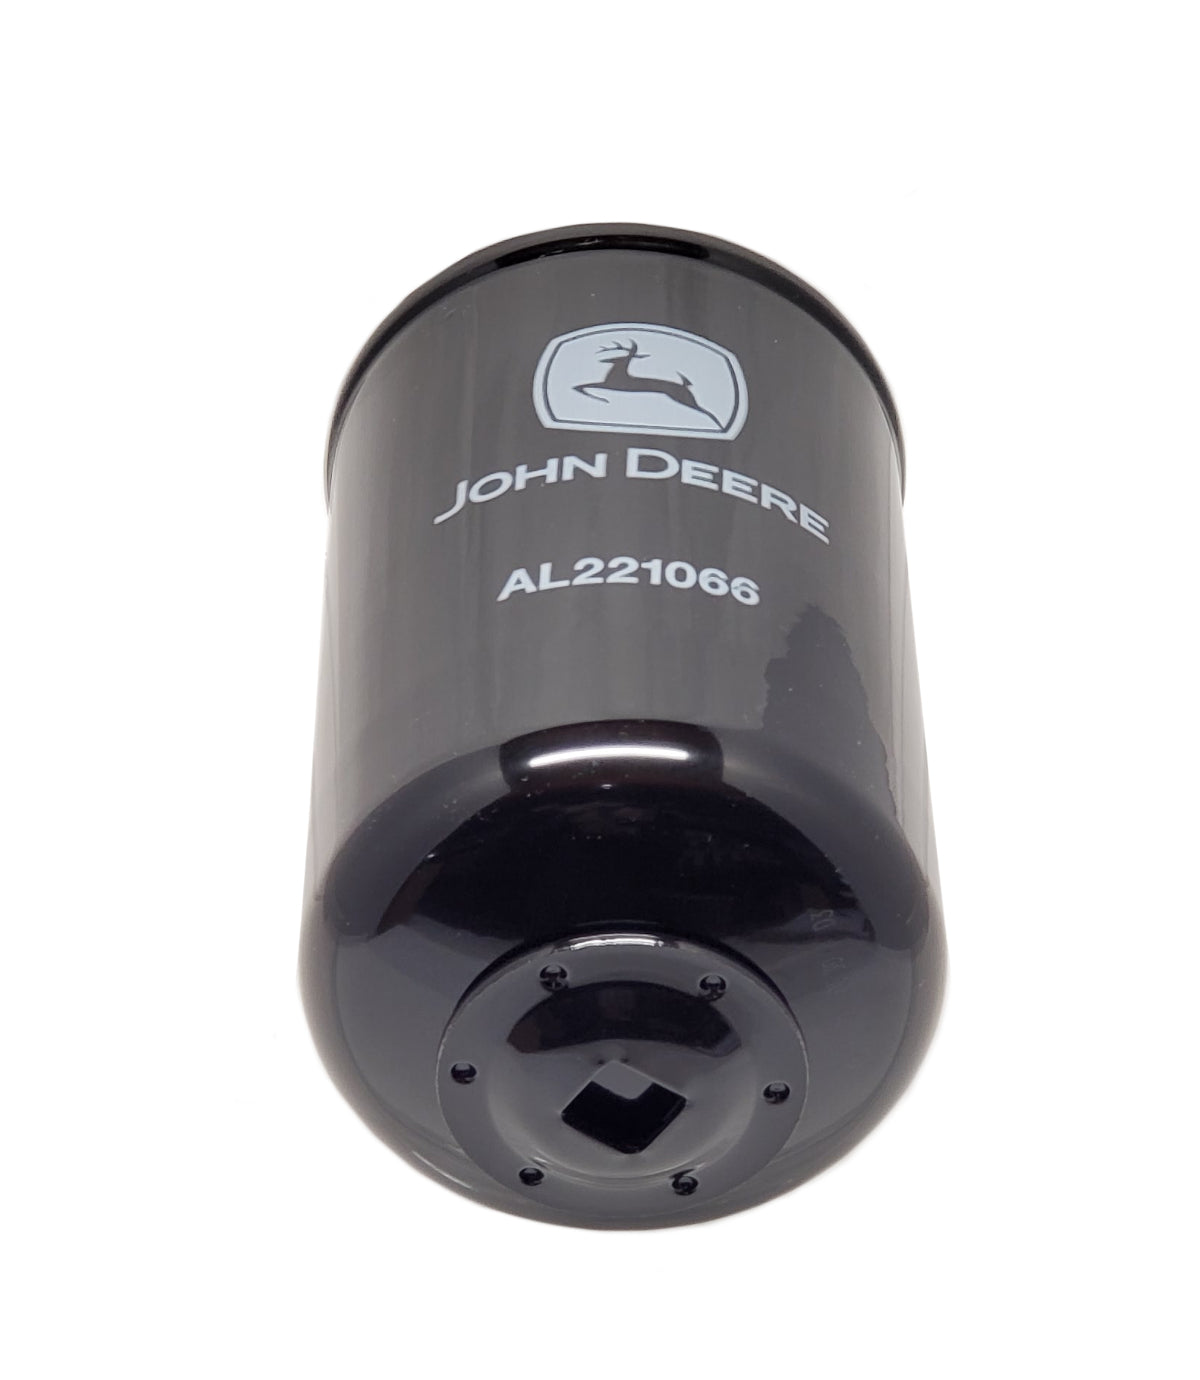 John Deere Original Equipment Oil Filter - AL221066